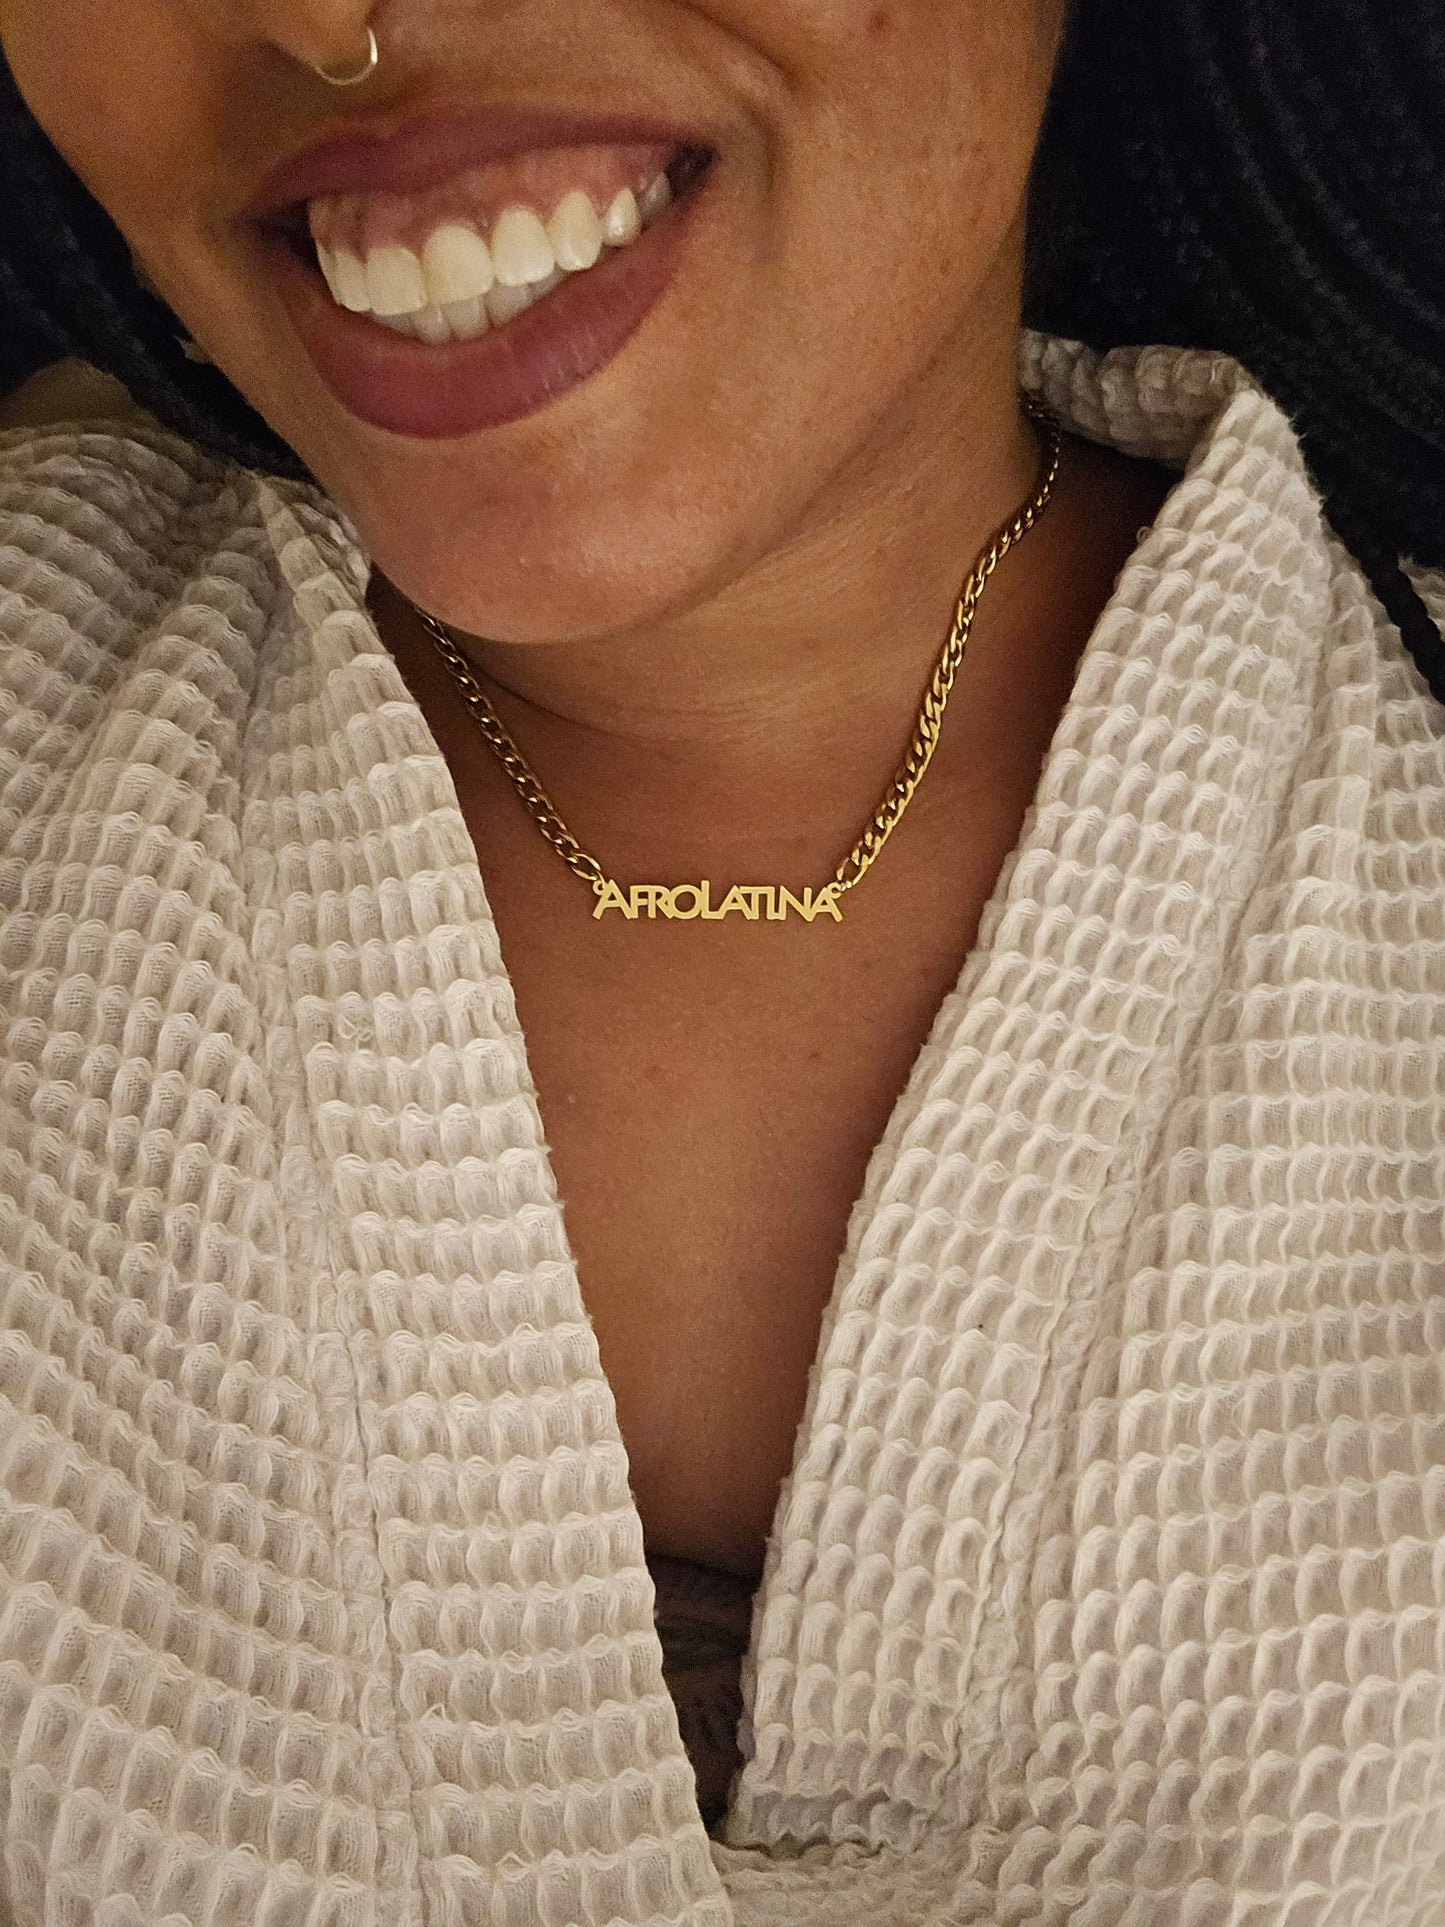 Afro Latina Necklace